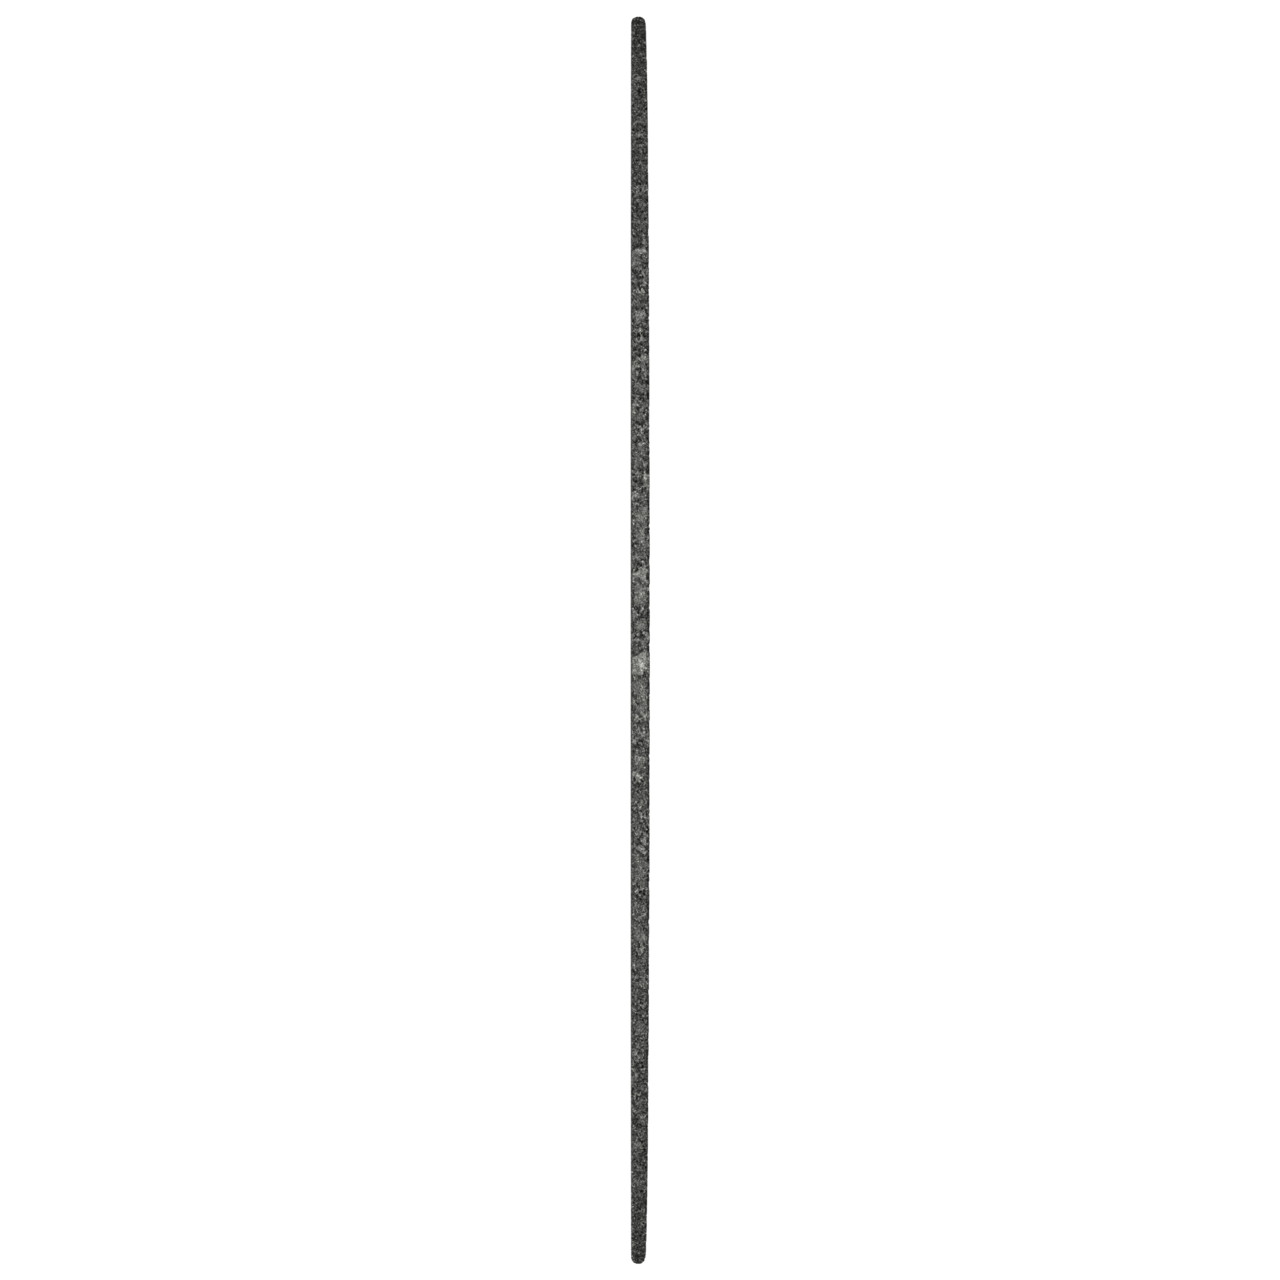 Dischi da taglio Tyrolit DxDxH 63x2x10 Per acciaio inox, forma: 41 - versione diritta, Art. 324303